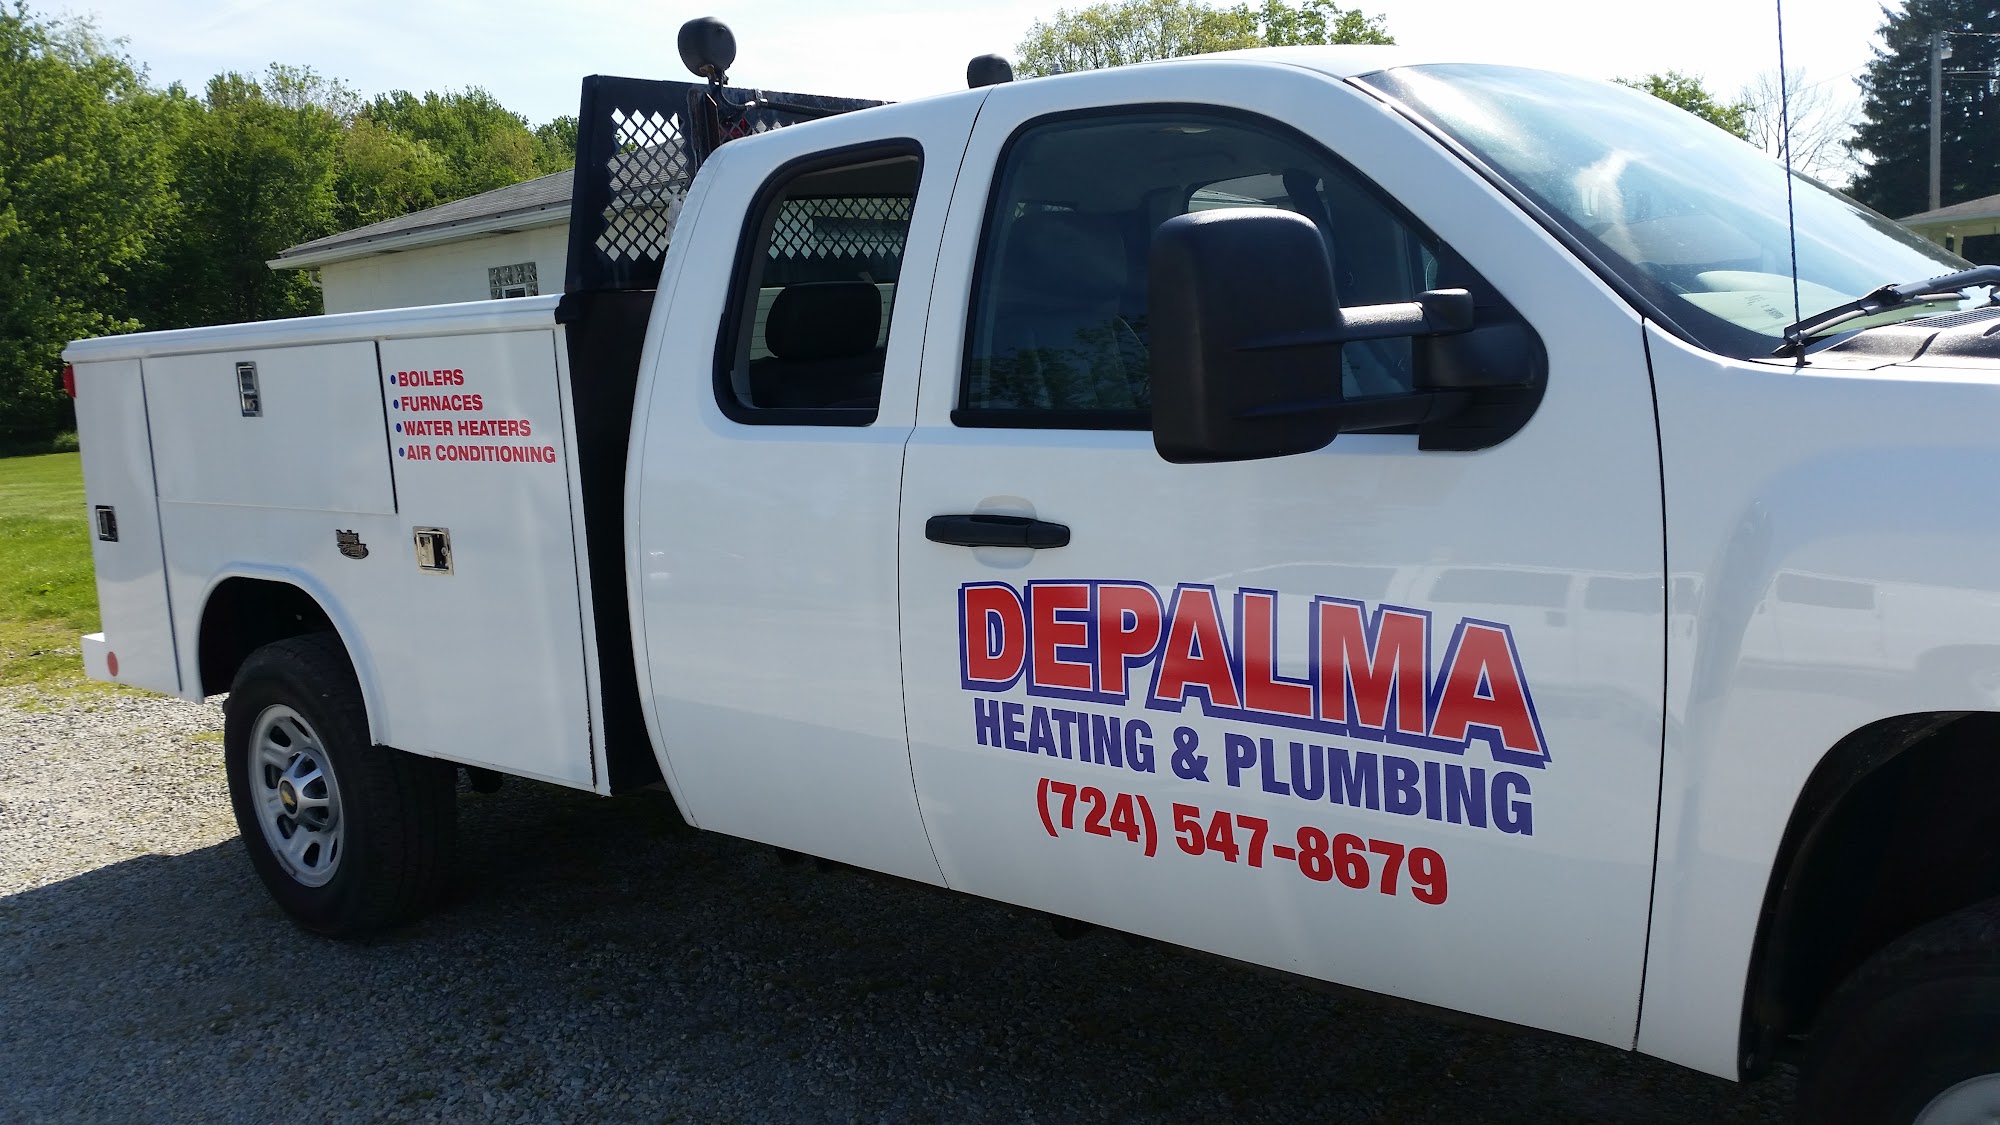 De Palma Plumbing & Heating 924 Reservoir St, Mt Pleasant Pennsylvania 15666